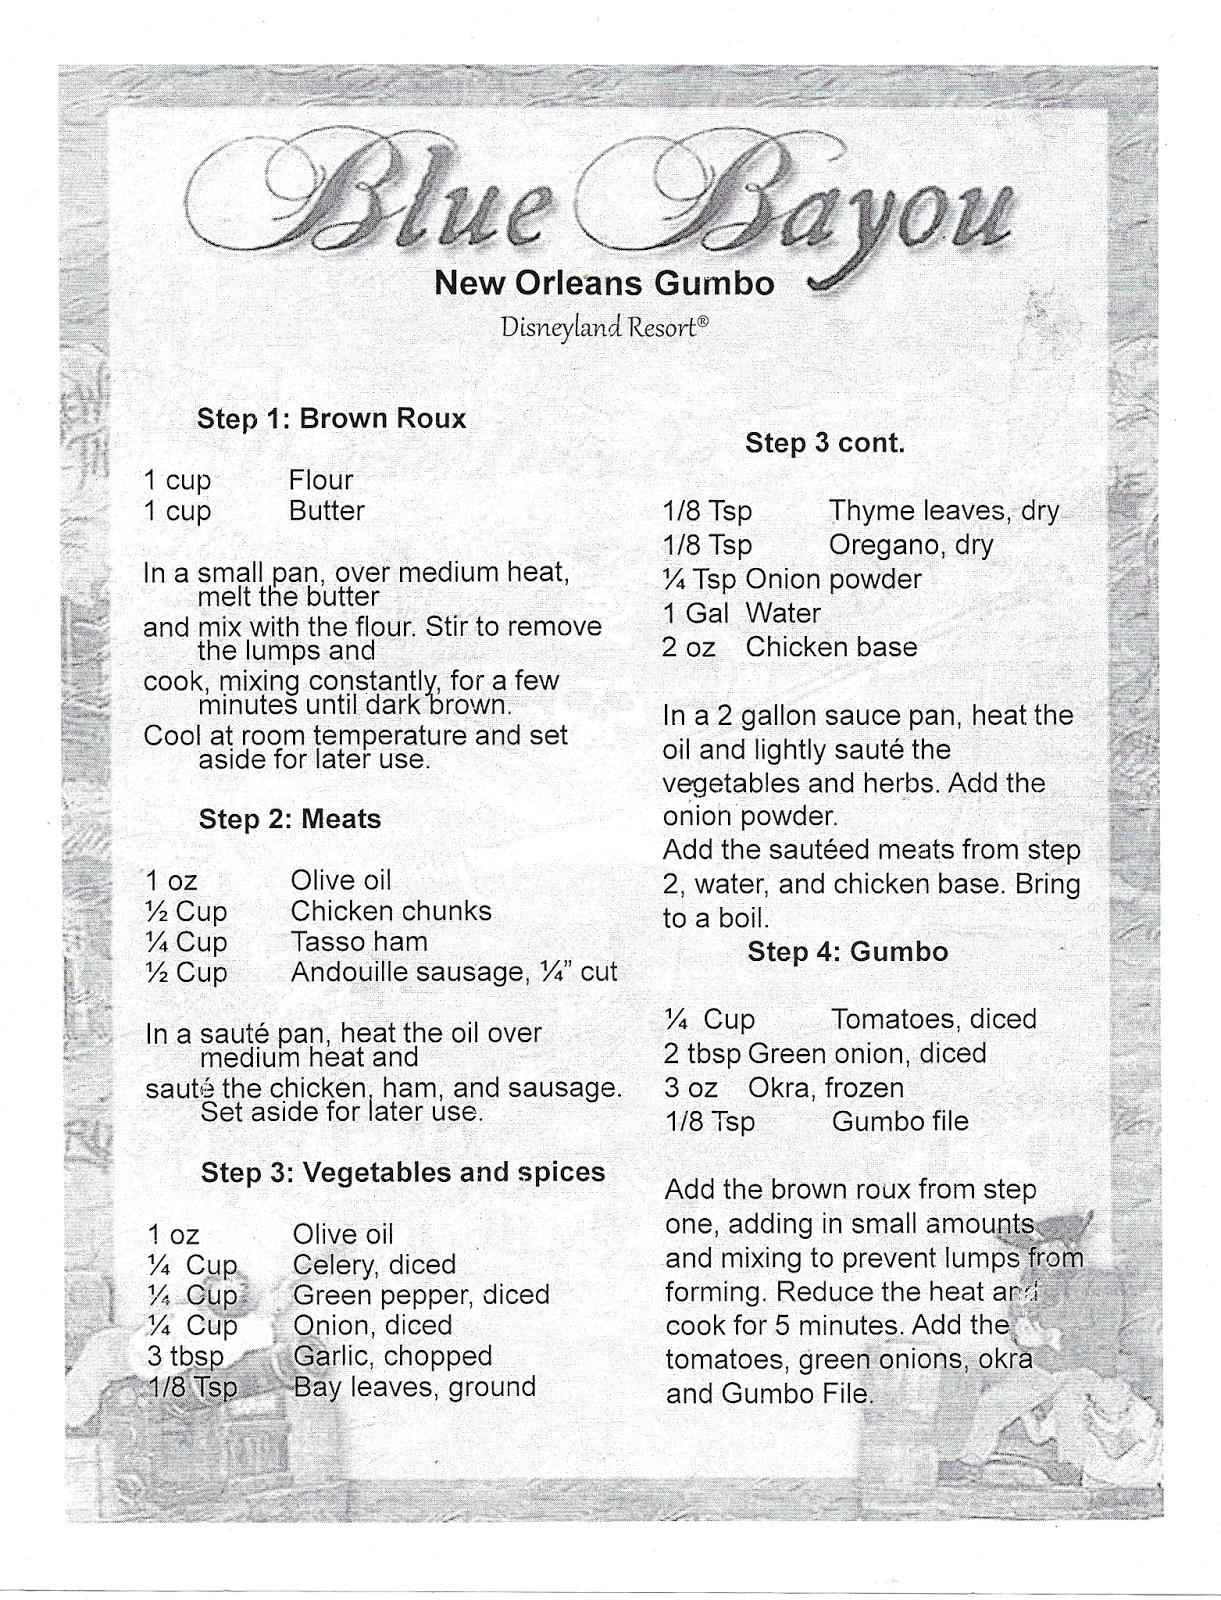 Disneyland recipes for Blue Bayou Gumbo